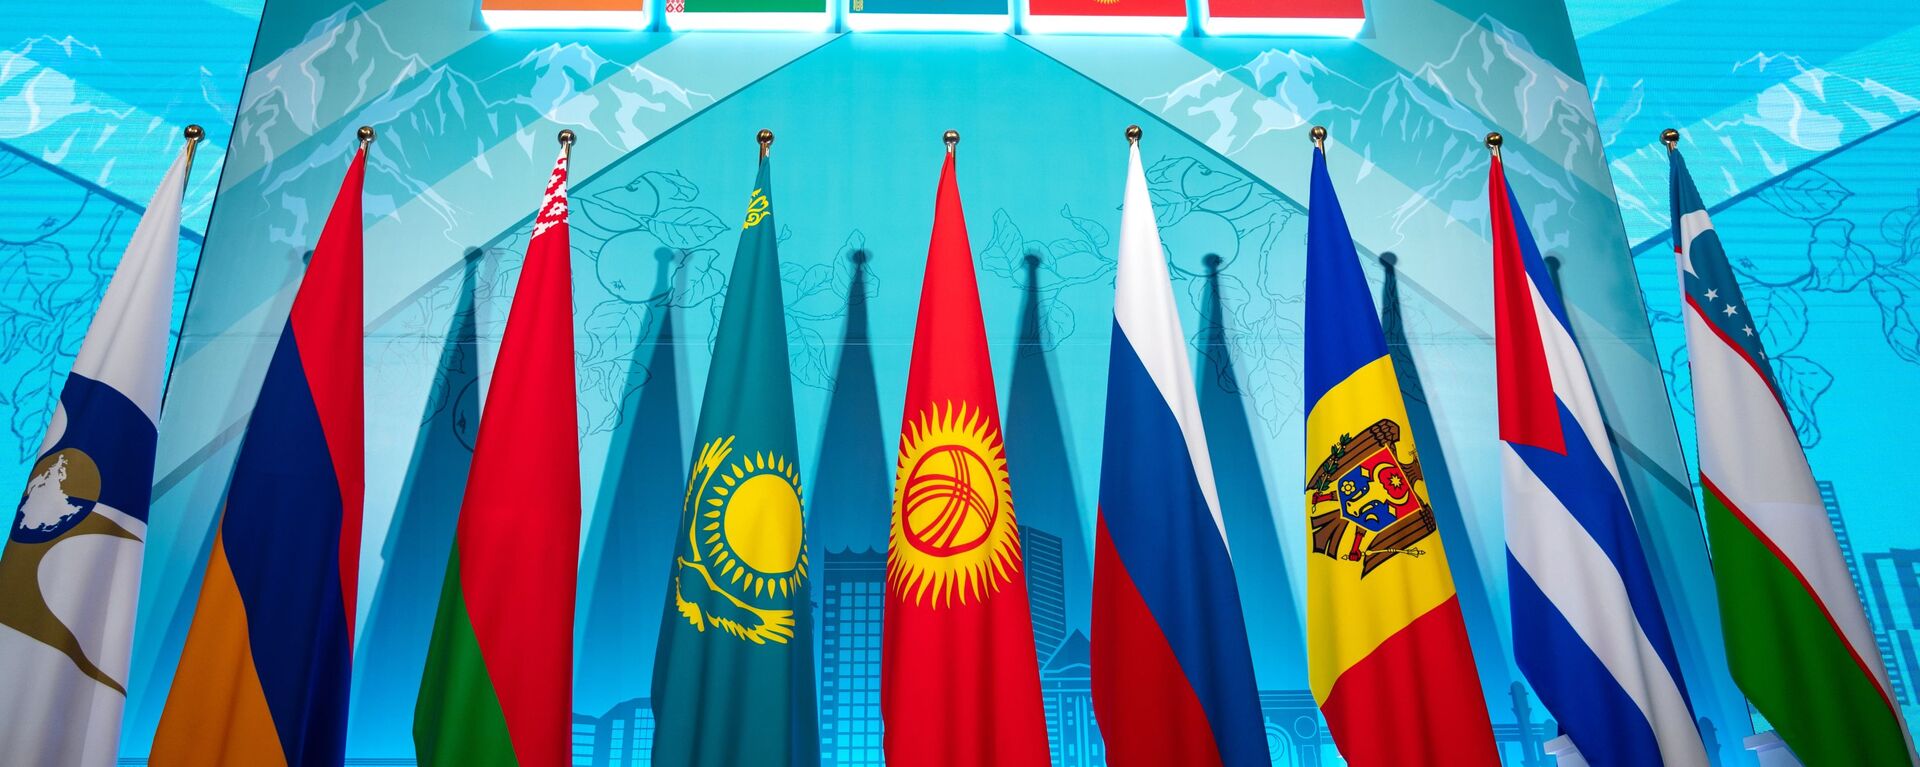 Флаги стран-участниц ЕАЭС и государств-наблюдателей при союзе - Sputnik Узбекистан, 1920, 16.03.2021